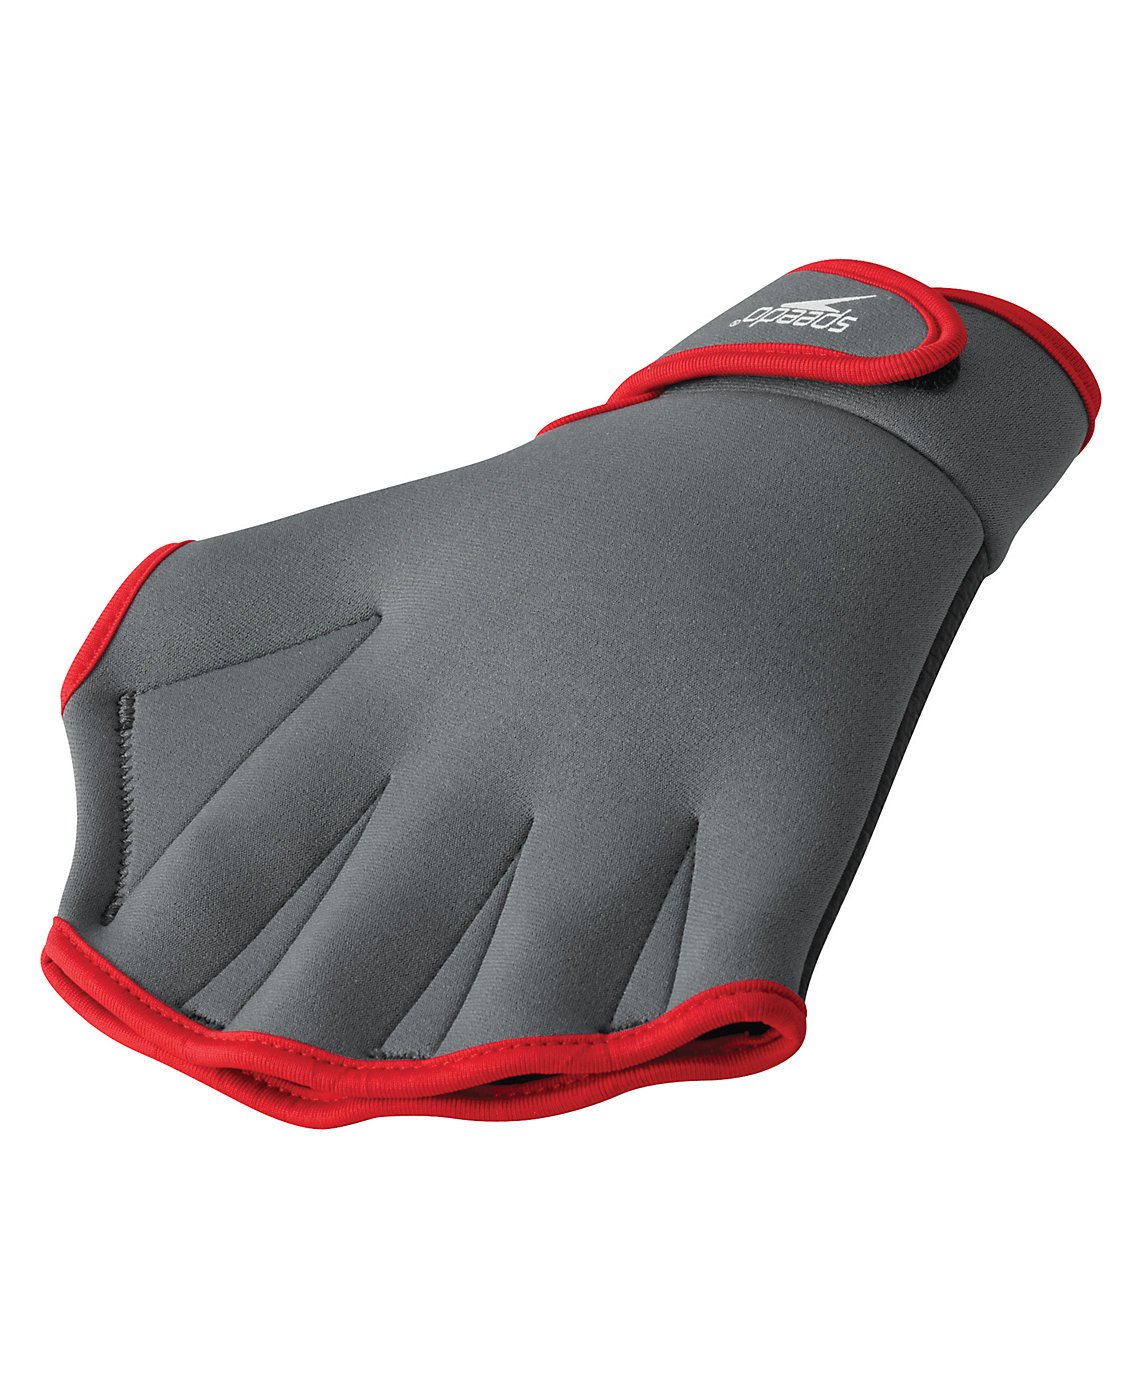 Speedo Aquatic Fitness Glove